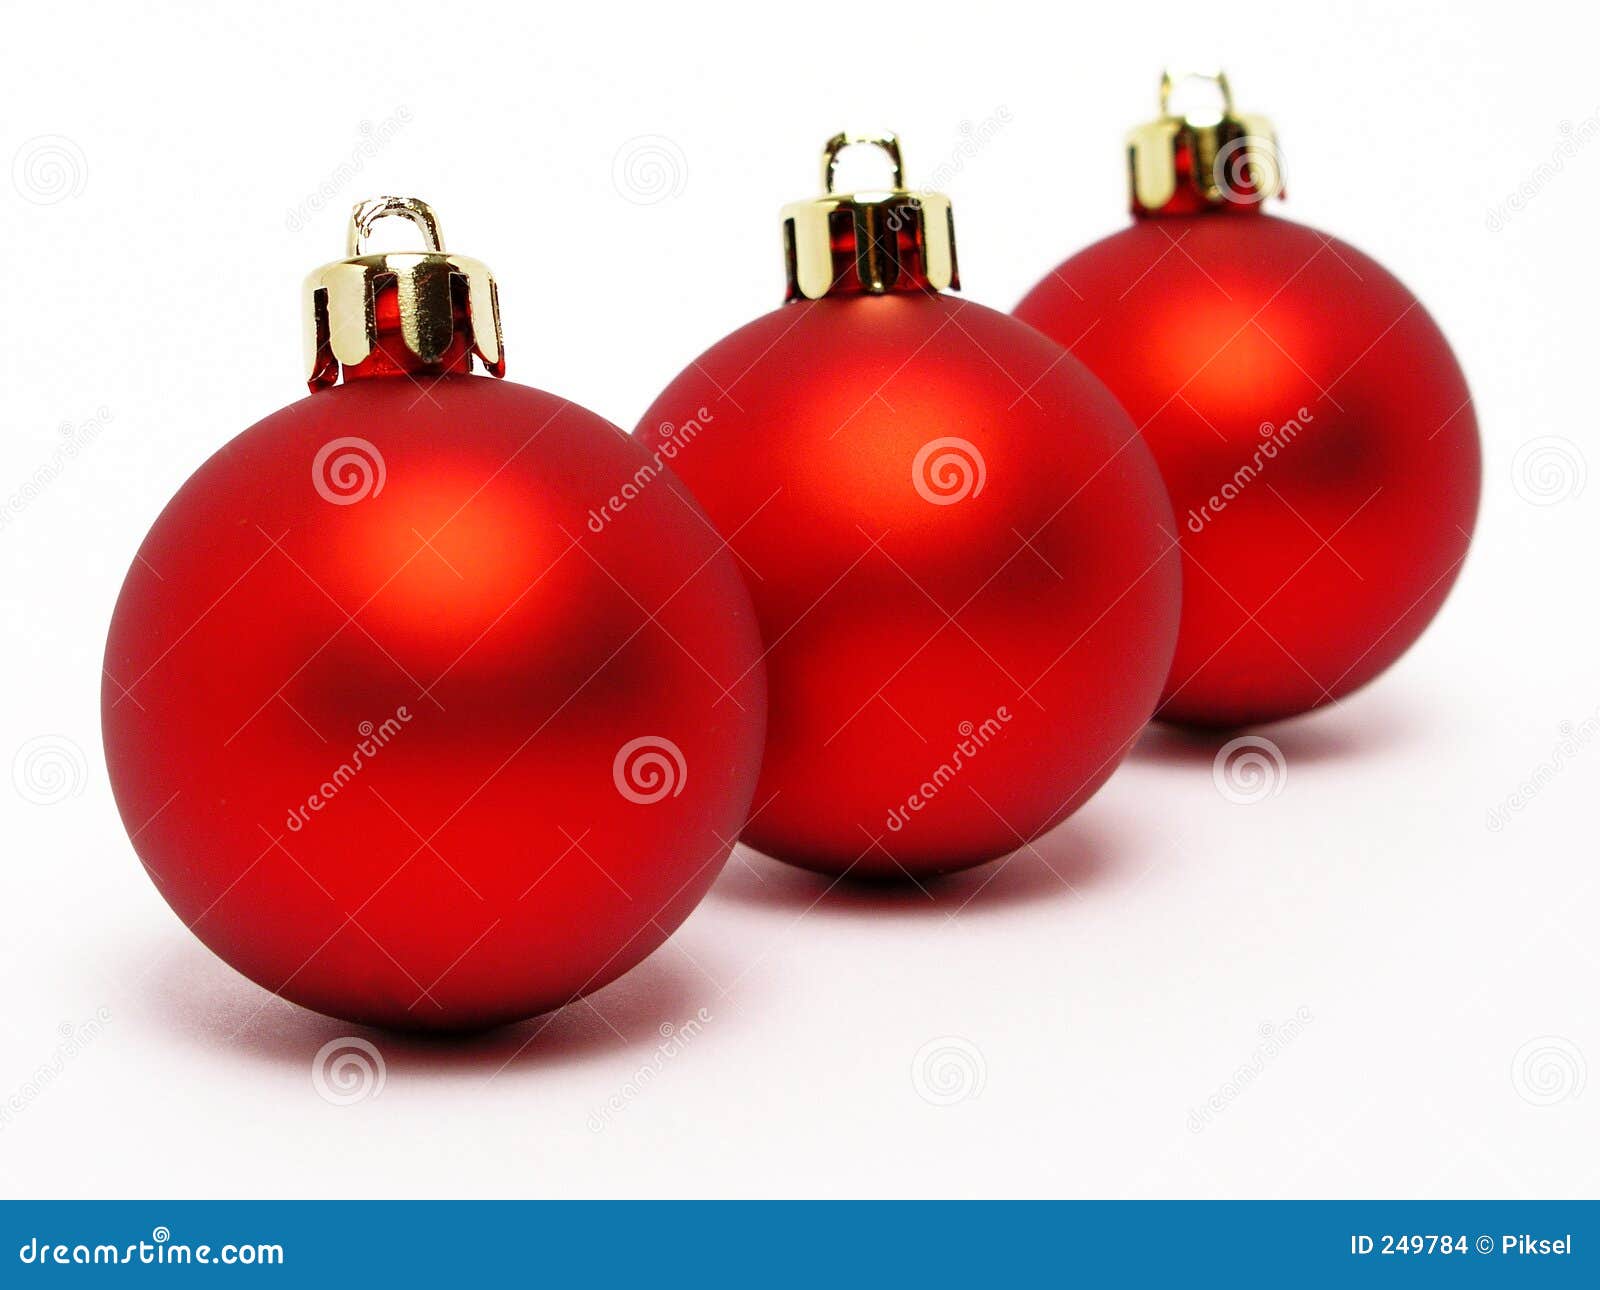 Red christmas balls stock photo. Image of hang, decoration - 249784